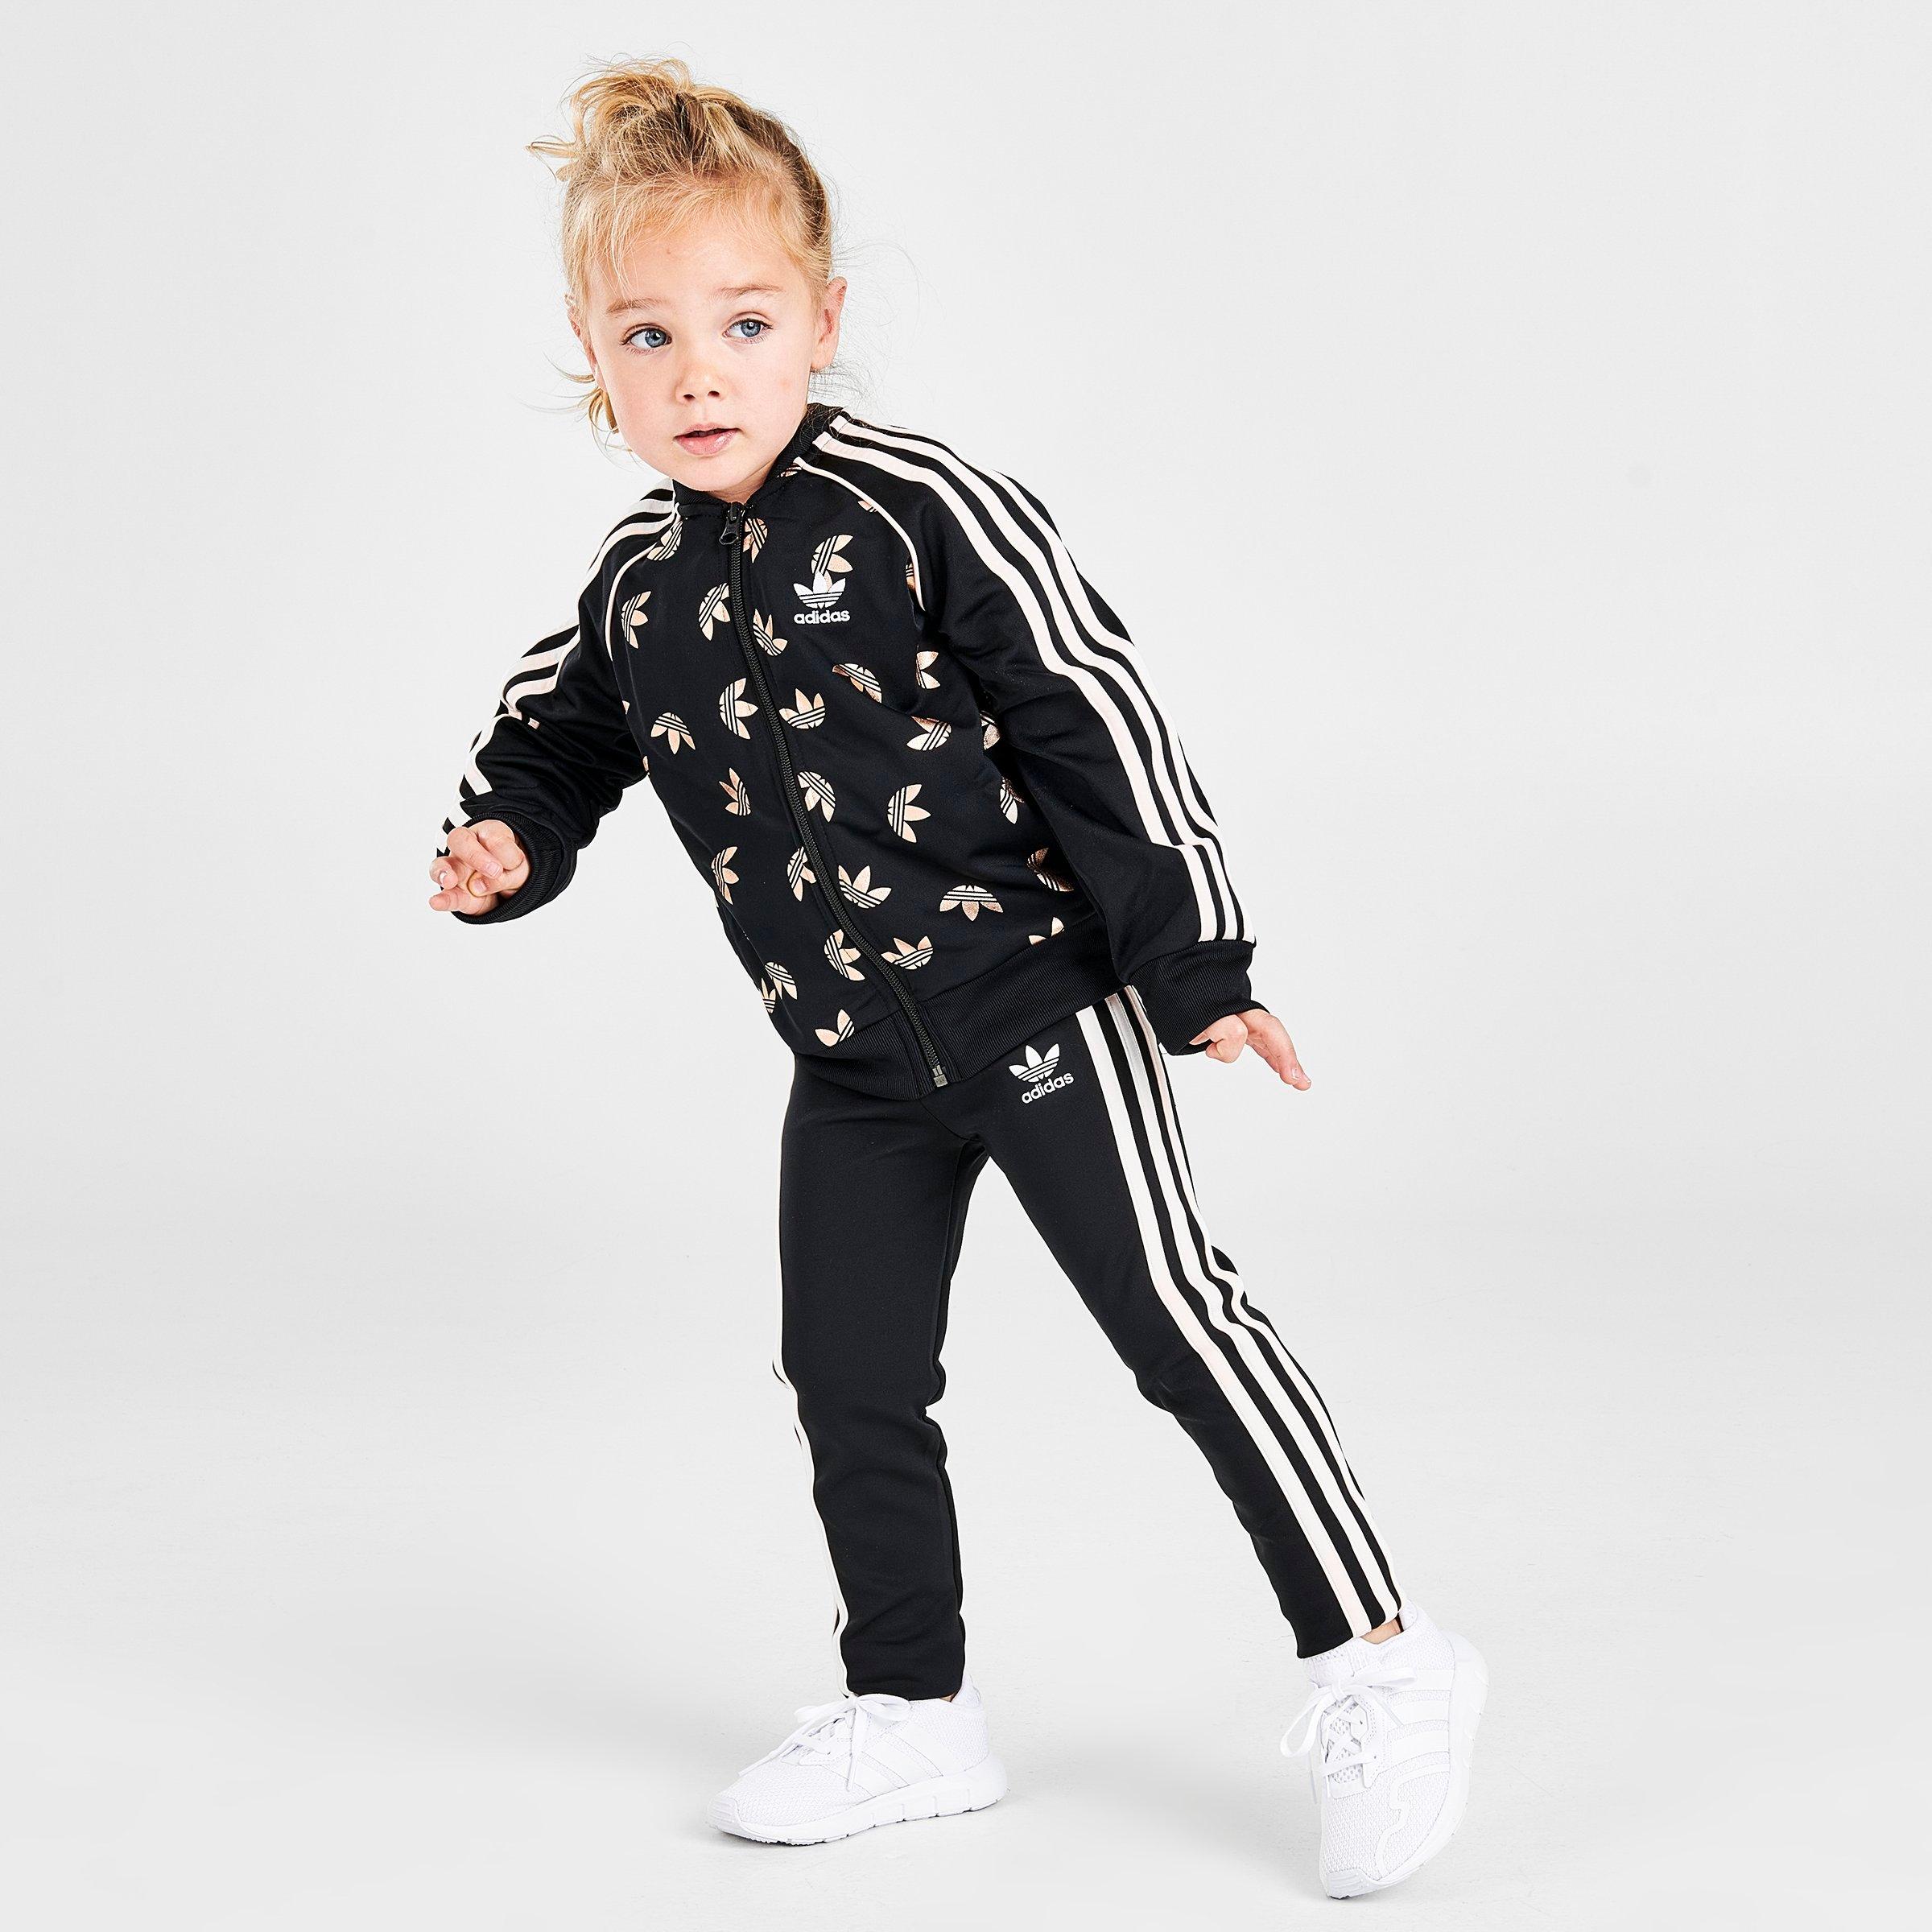 toddler adidas track jacket